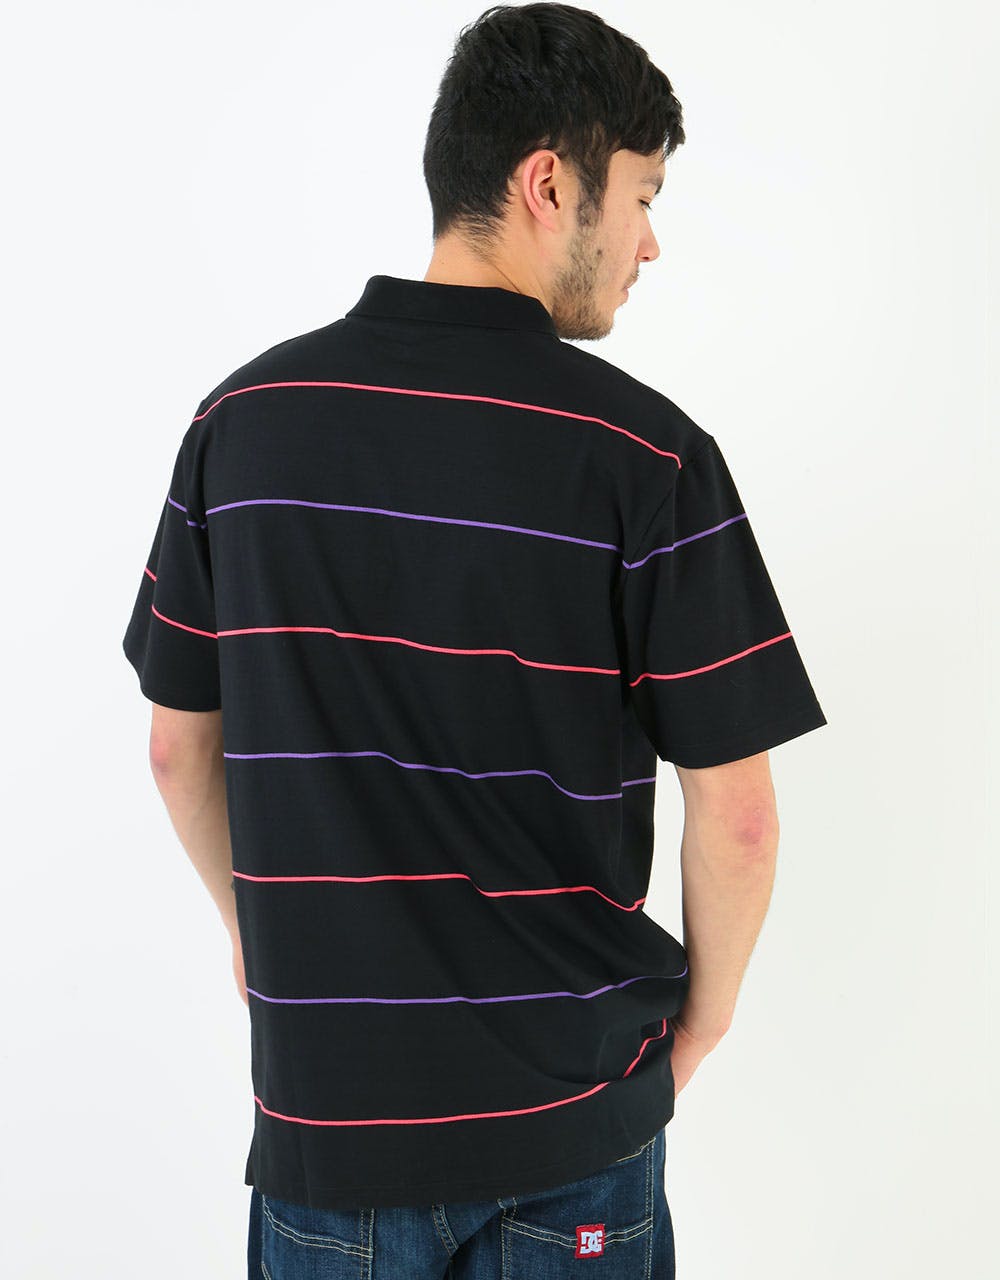 Enjoi No Comply S/S Polo Shirt - Black/Coral Stripe